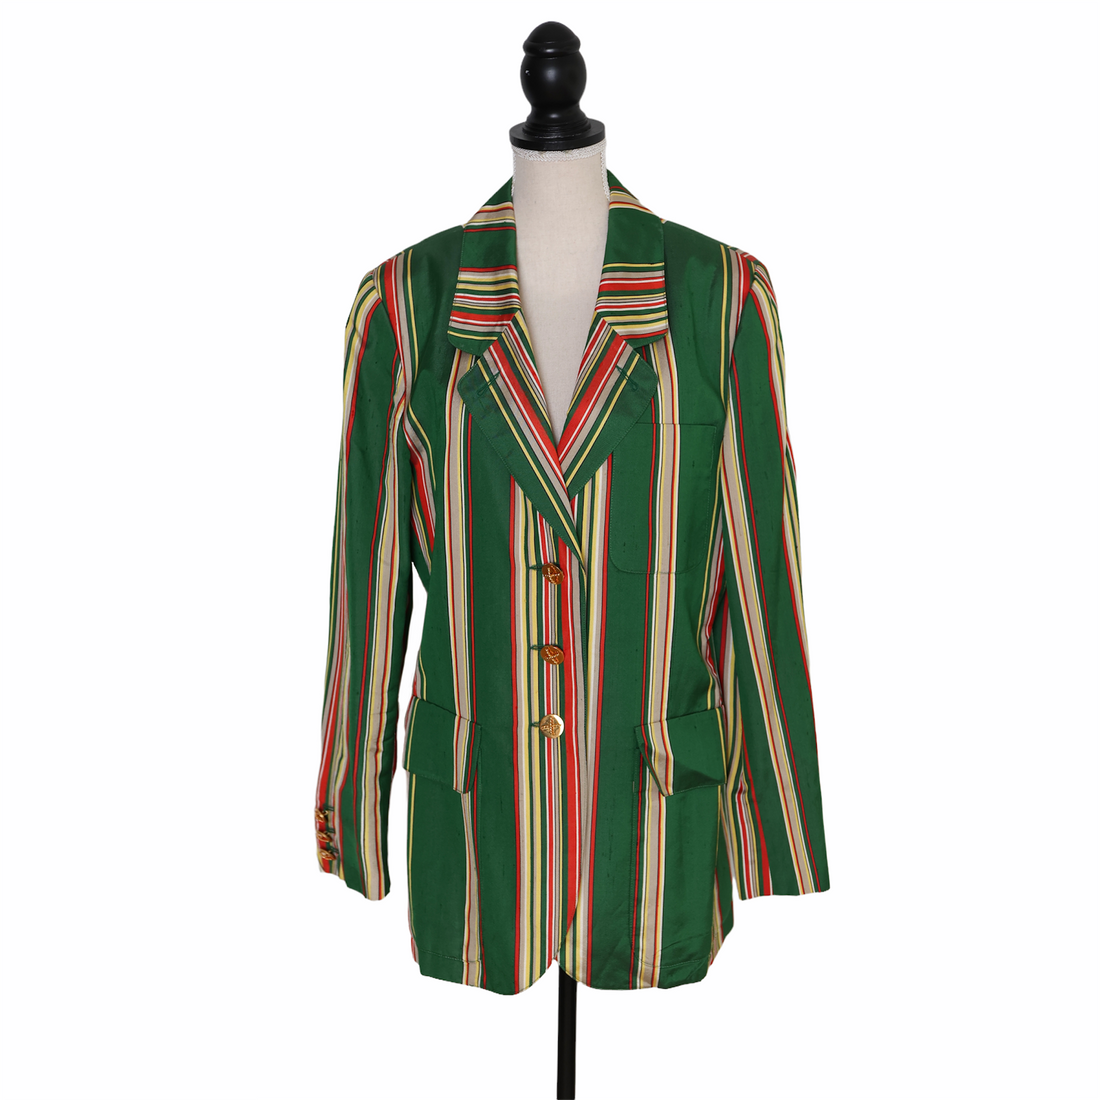 Hermès striped blazer in wild silk